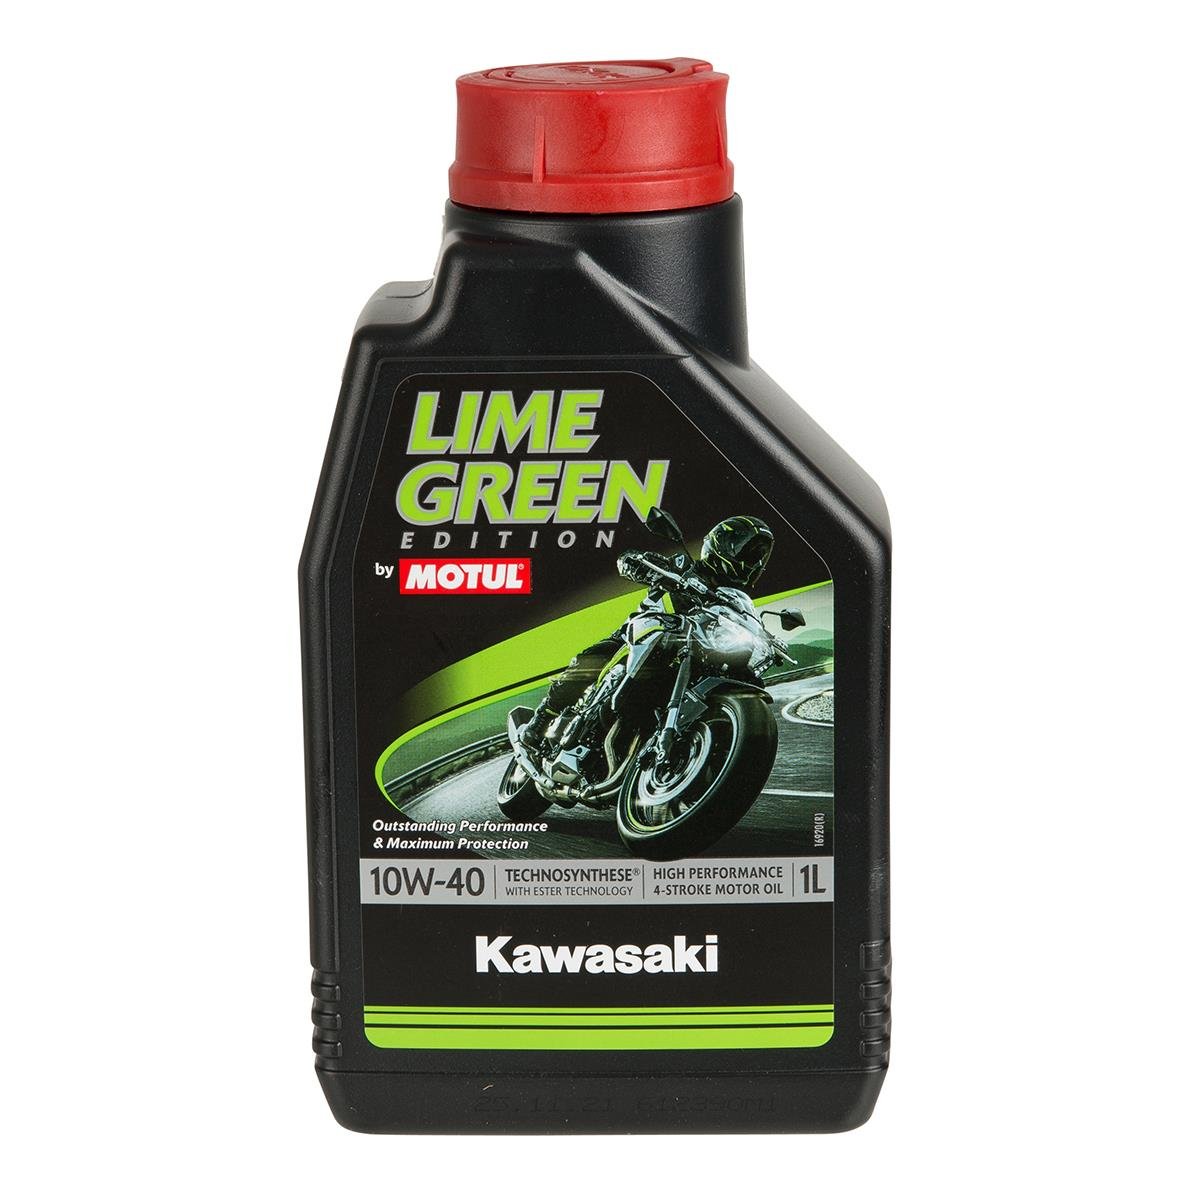 Motul Motor Oil Kawasaki Lime Green 10W40, 1 Liter